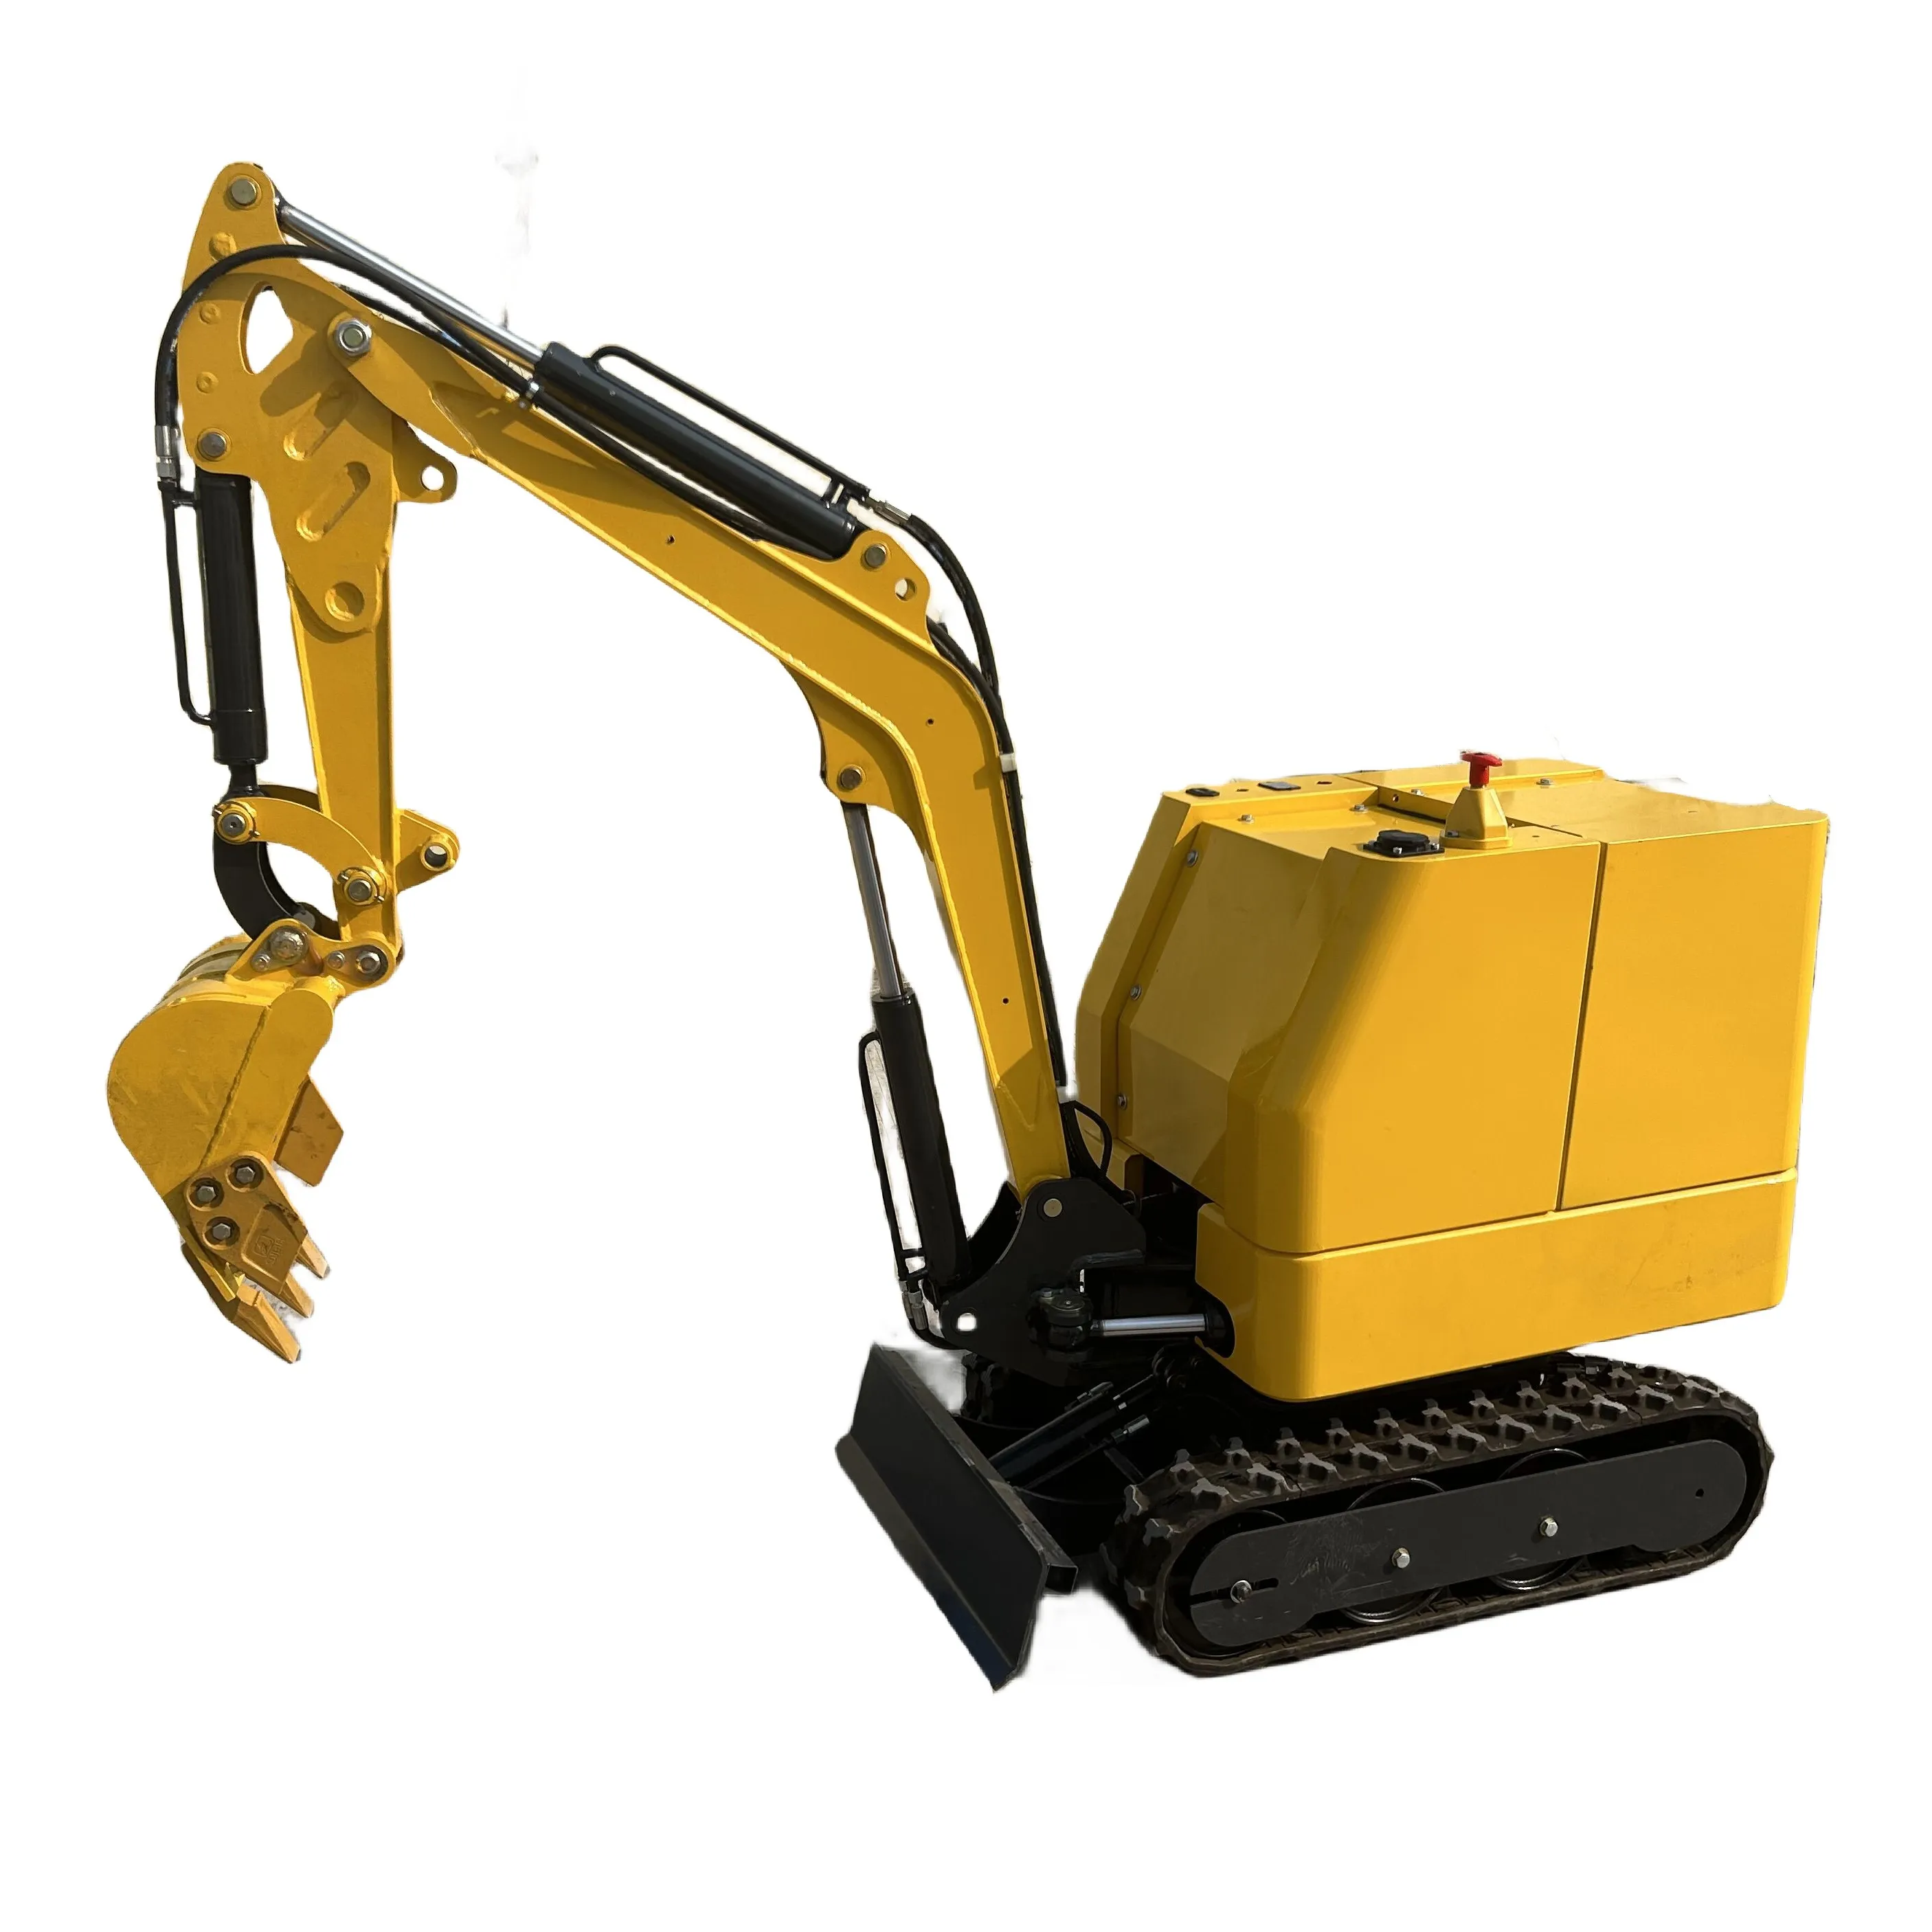 Robot indoor demolition mini excavator with wireless control and zero emissions